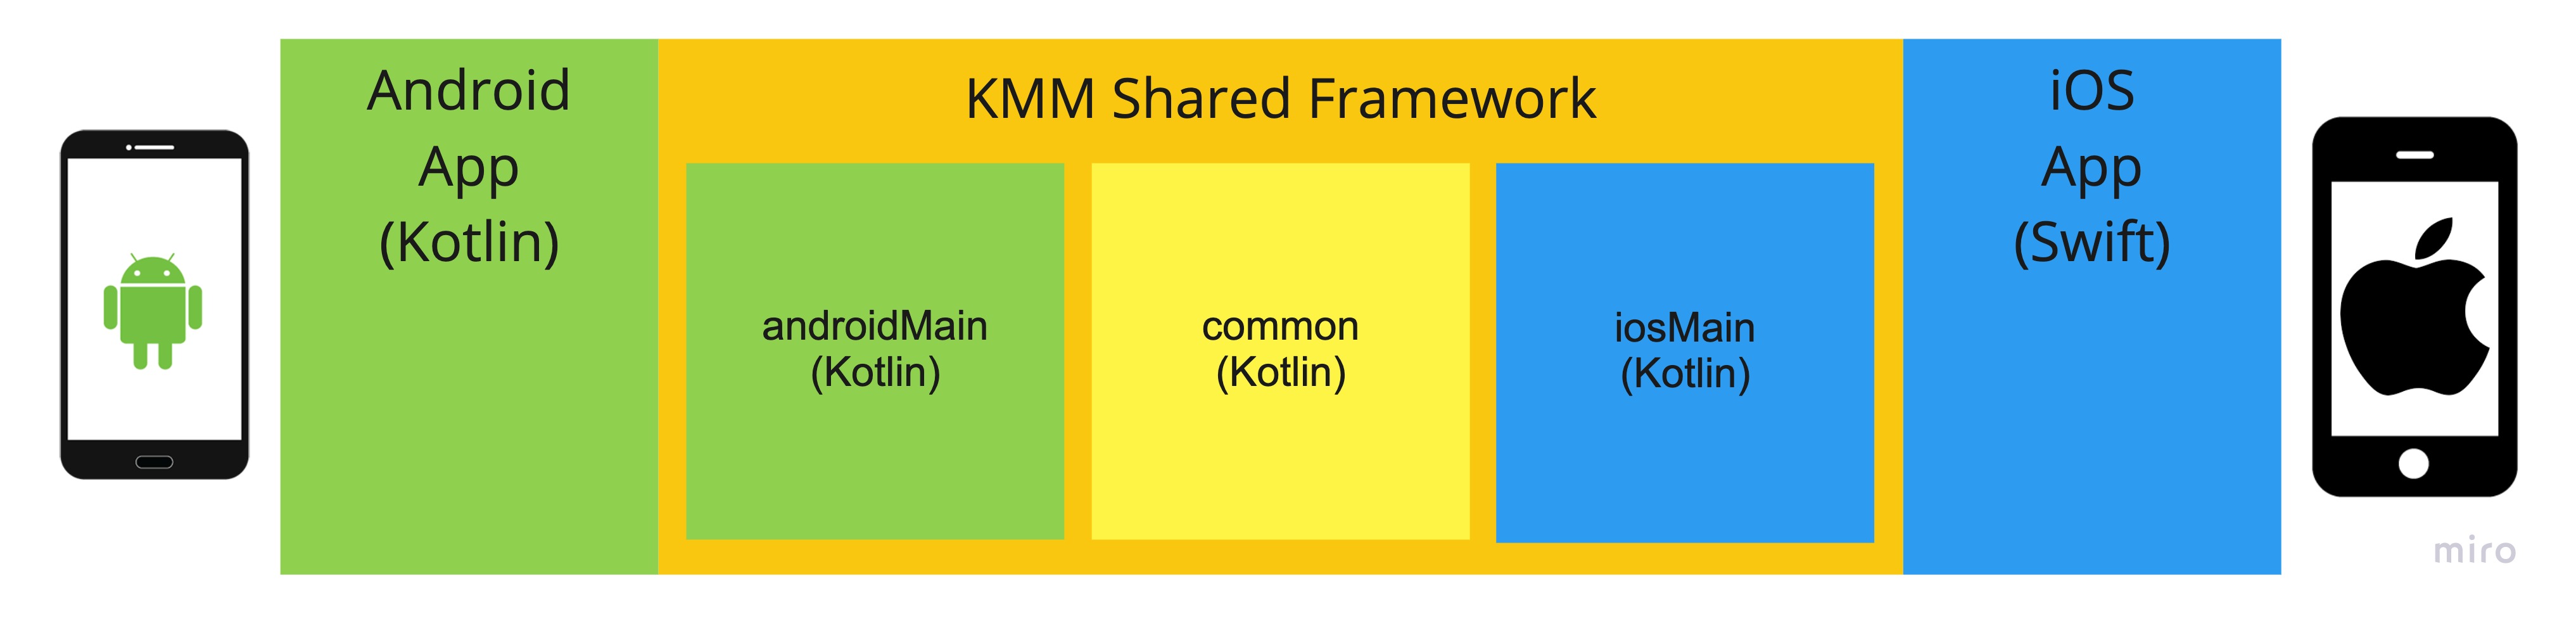 KMM Code Organization